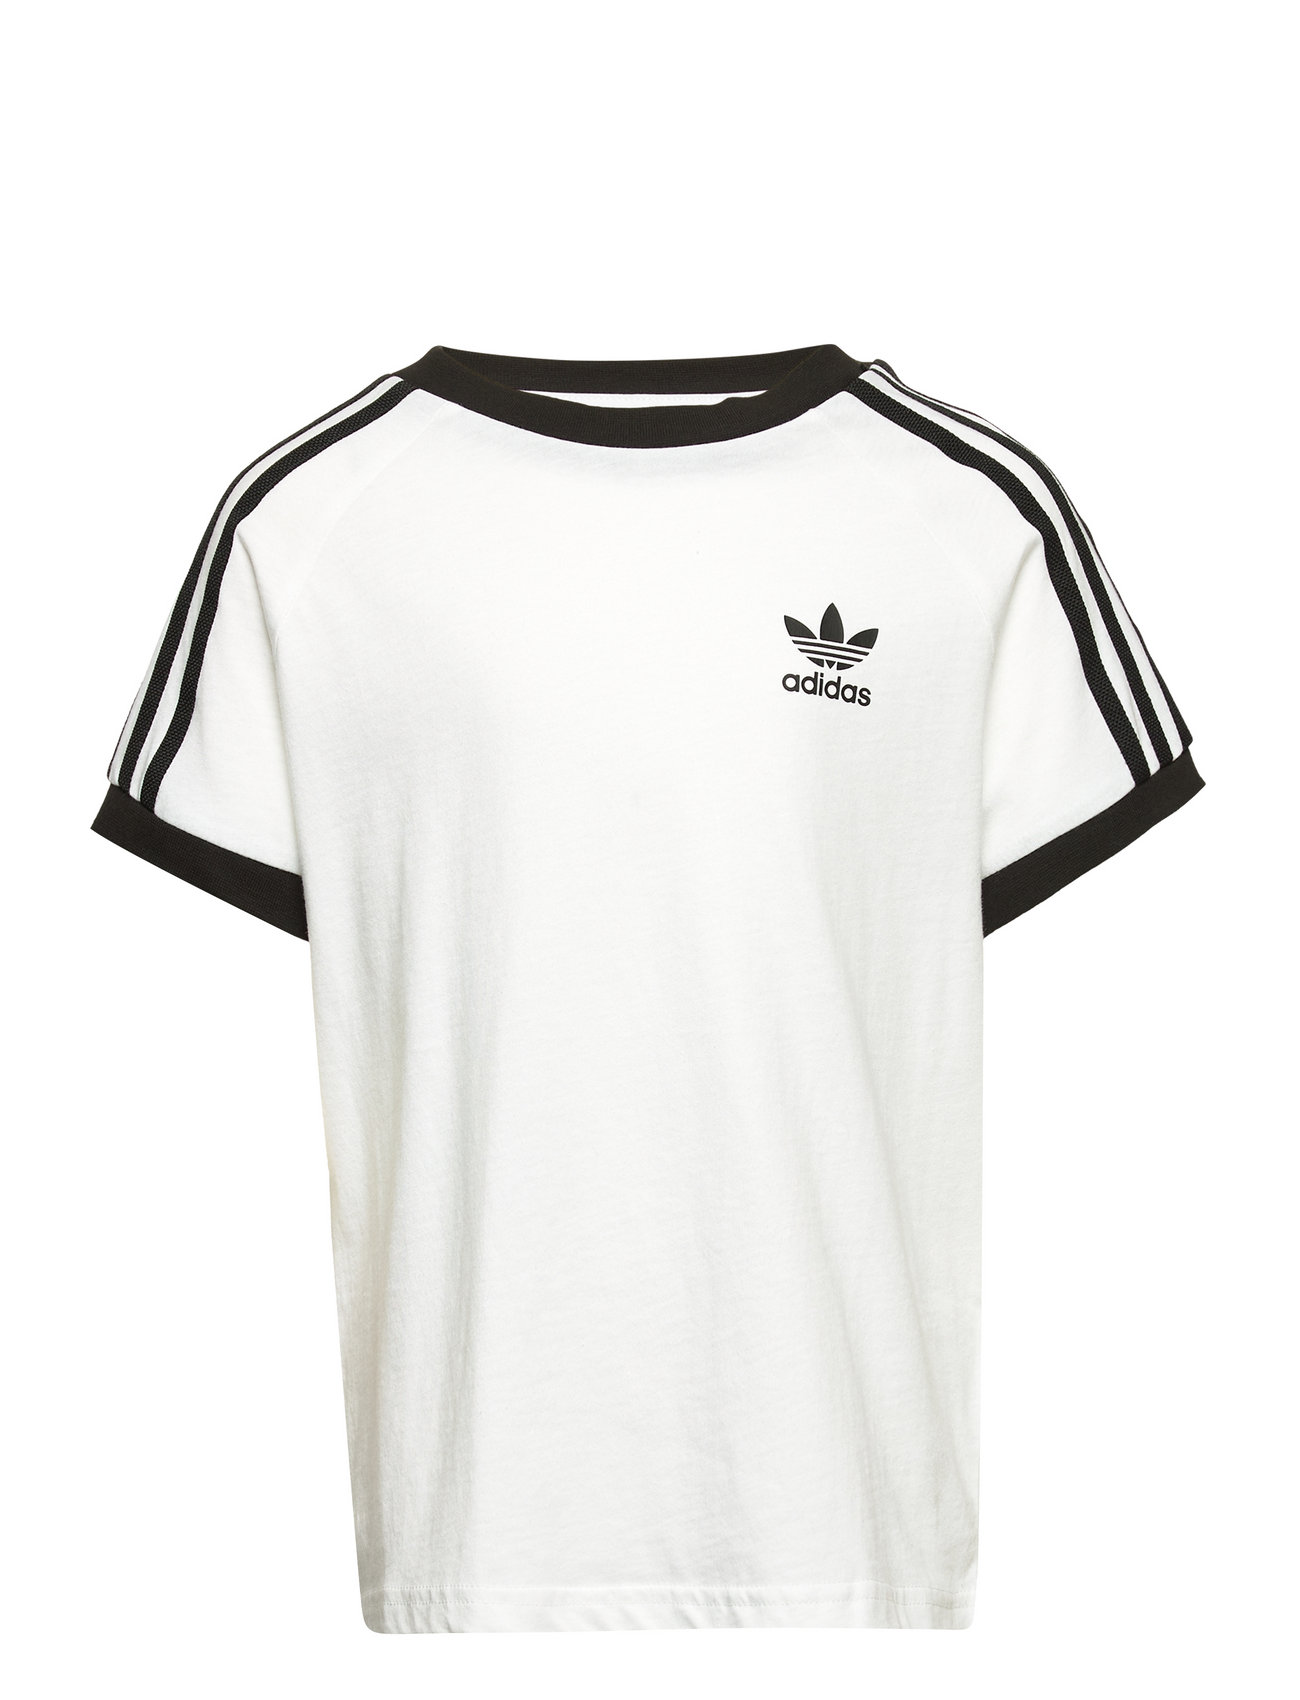 3Stripes Tee Sport T-shirts Sports Tops White Adidas Originals